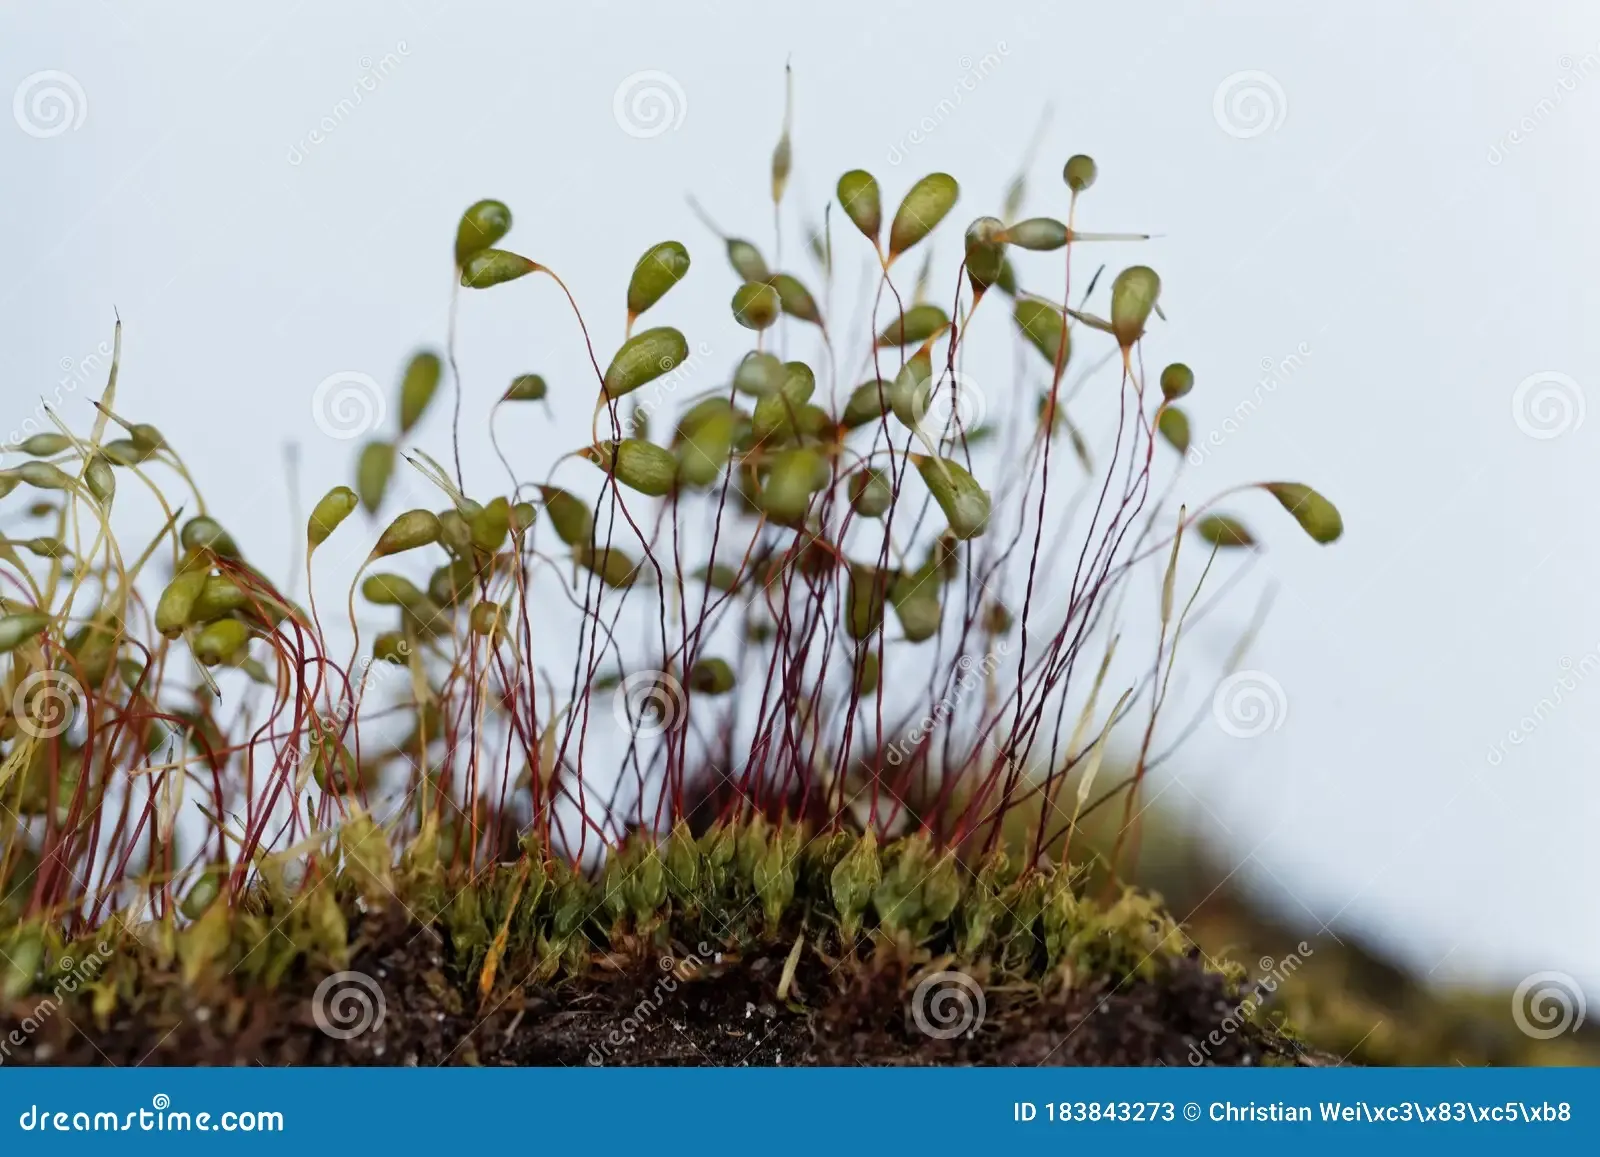 macro-photo-sporophytes-bryum-moss-macro-photo-sporophytes-bryum-moss-white-background-183843273.jpg